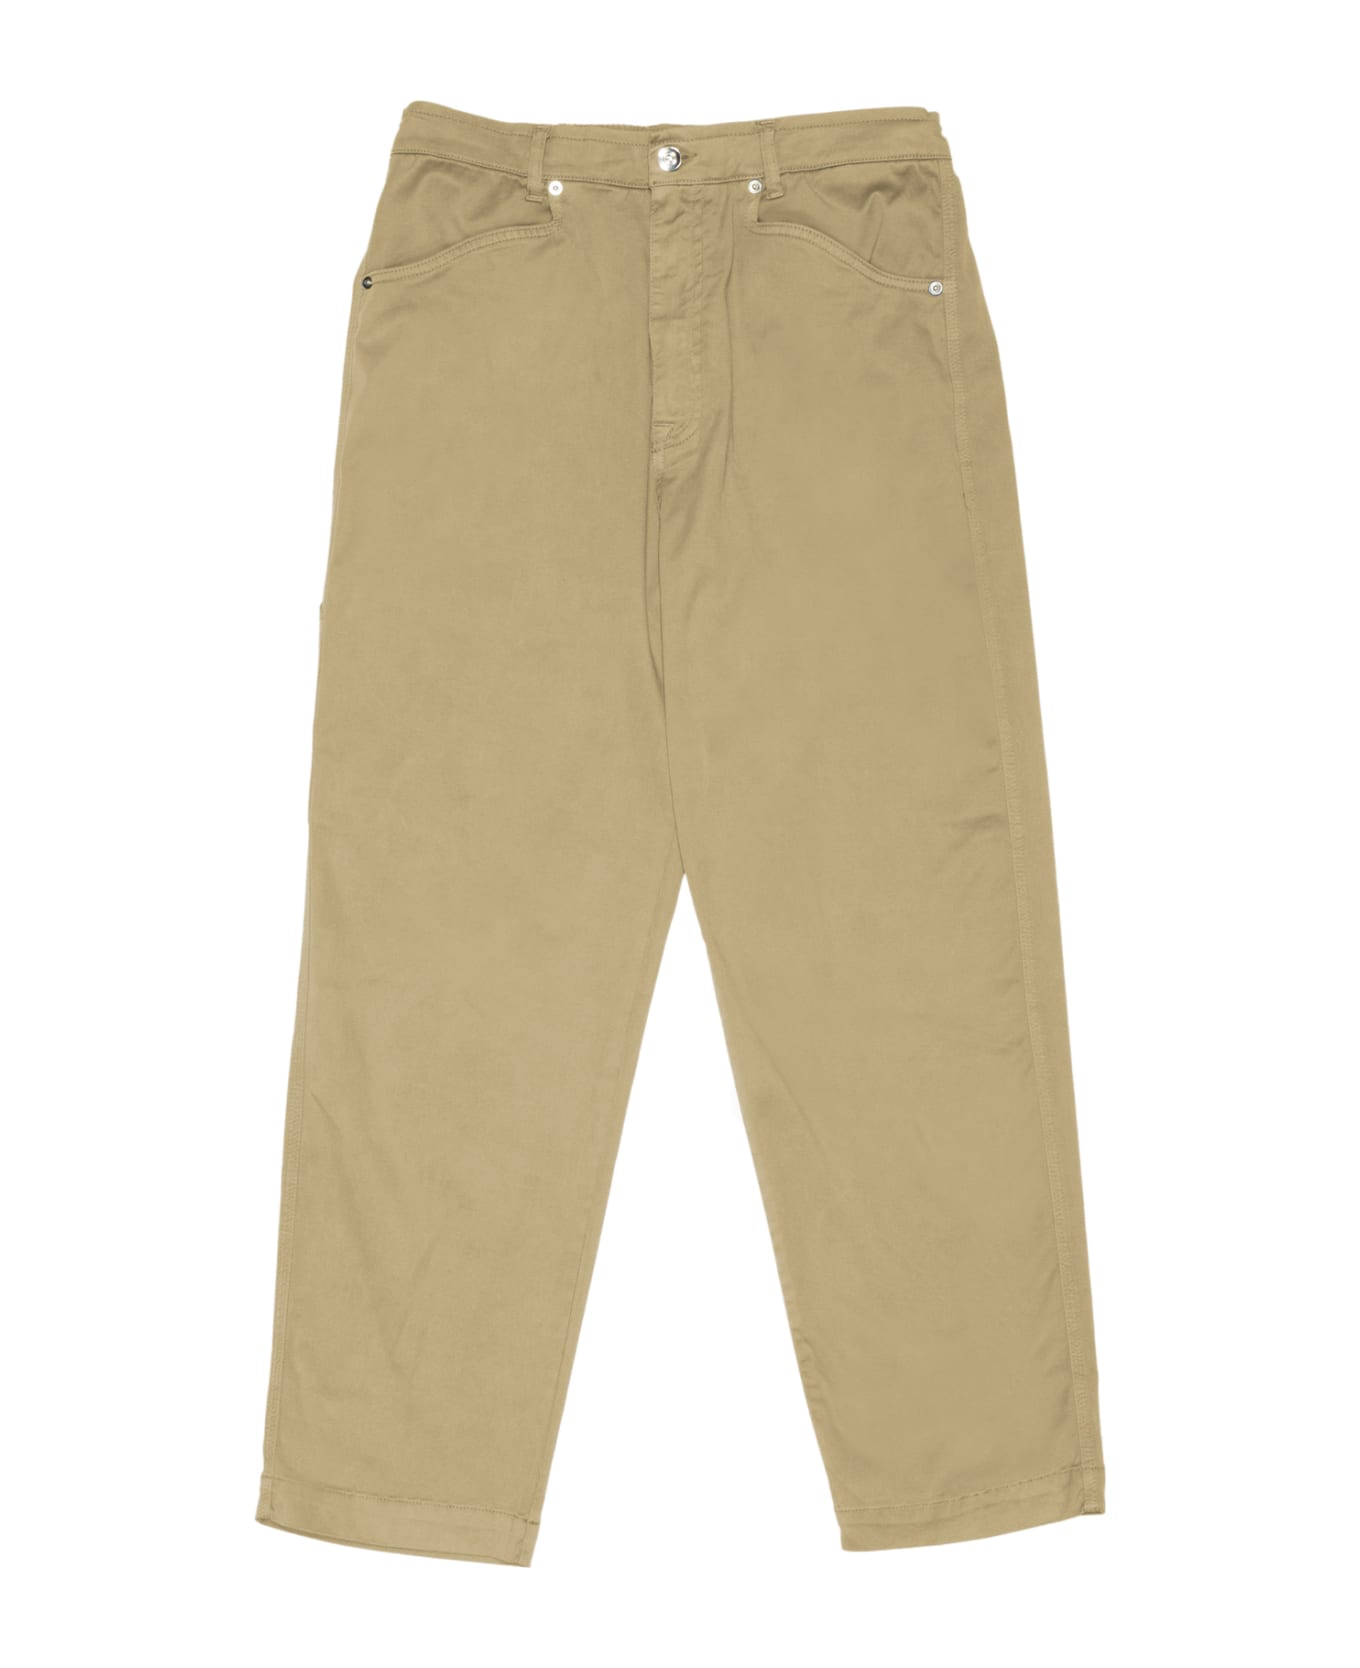 Altea 5 Pocket Trousers Sand - SABBIA ボトムス